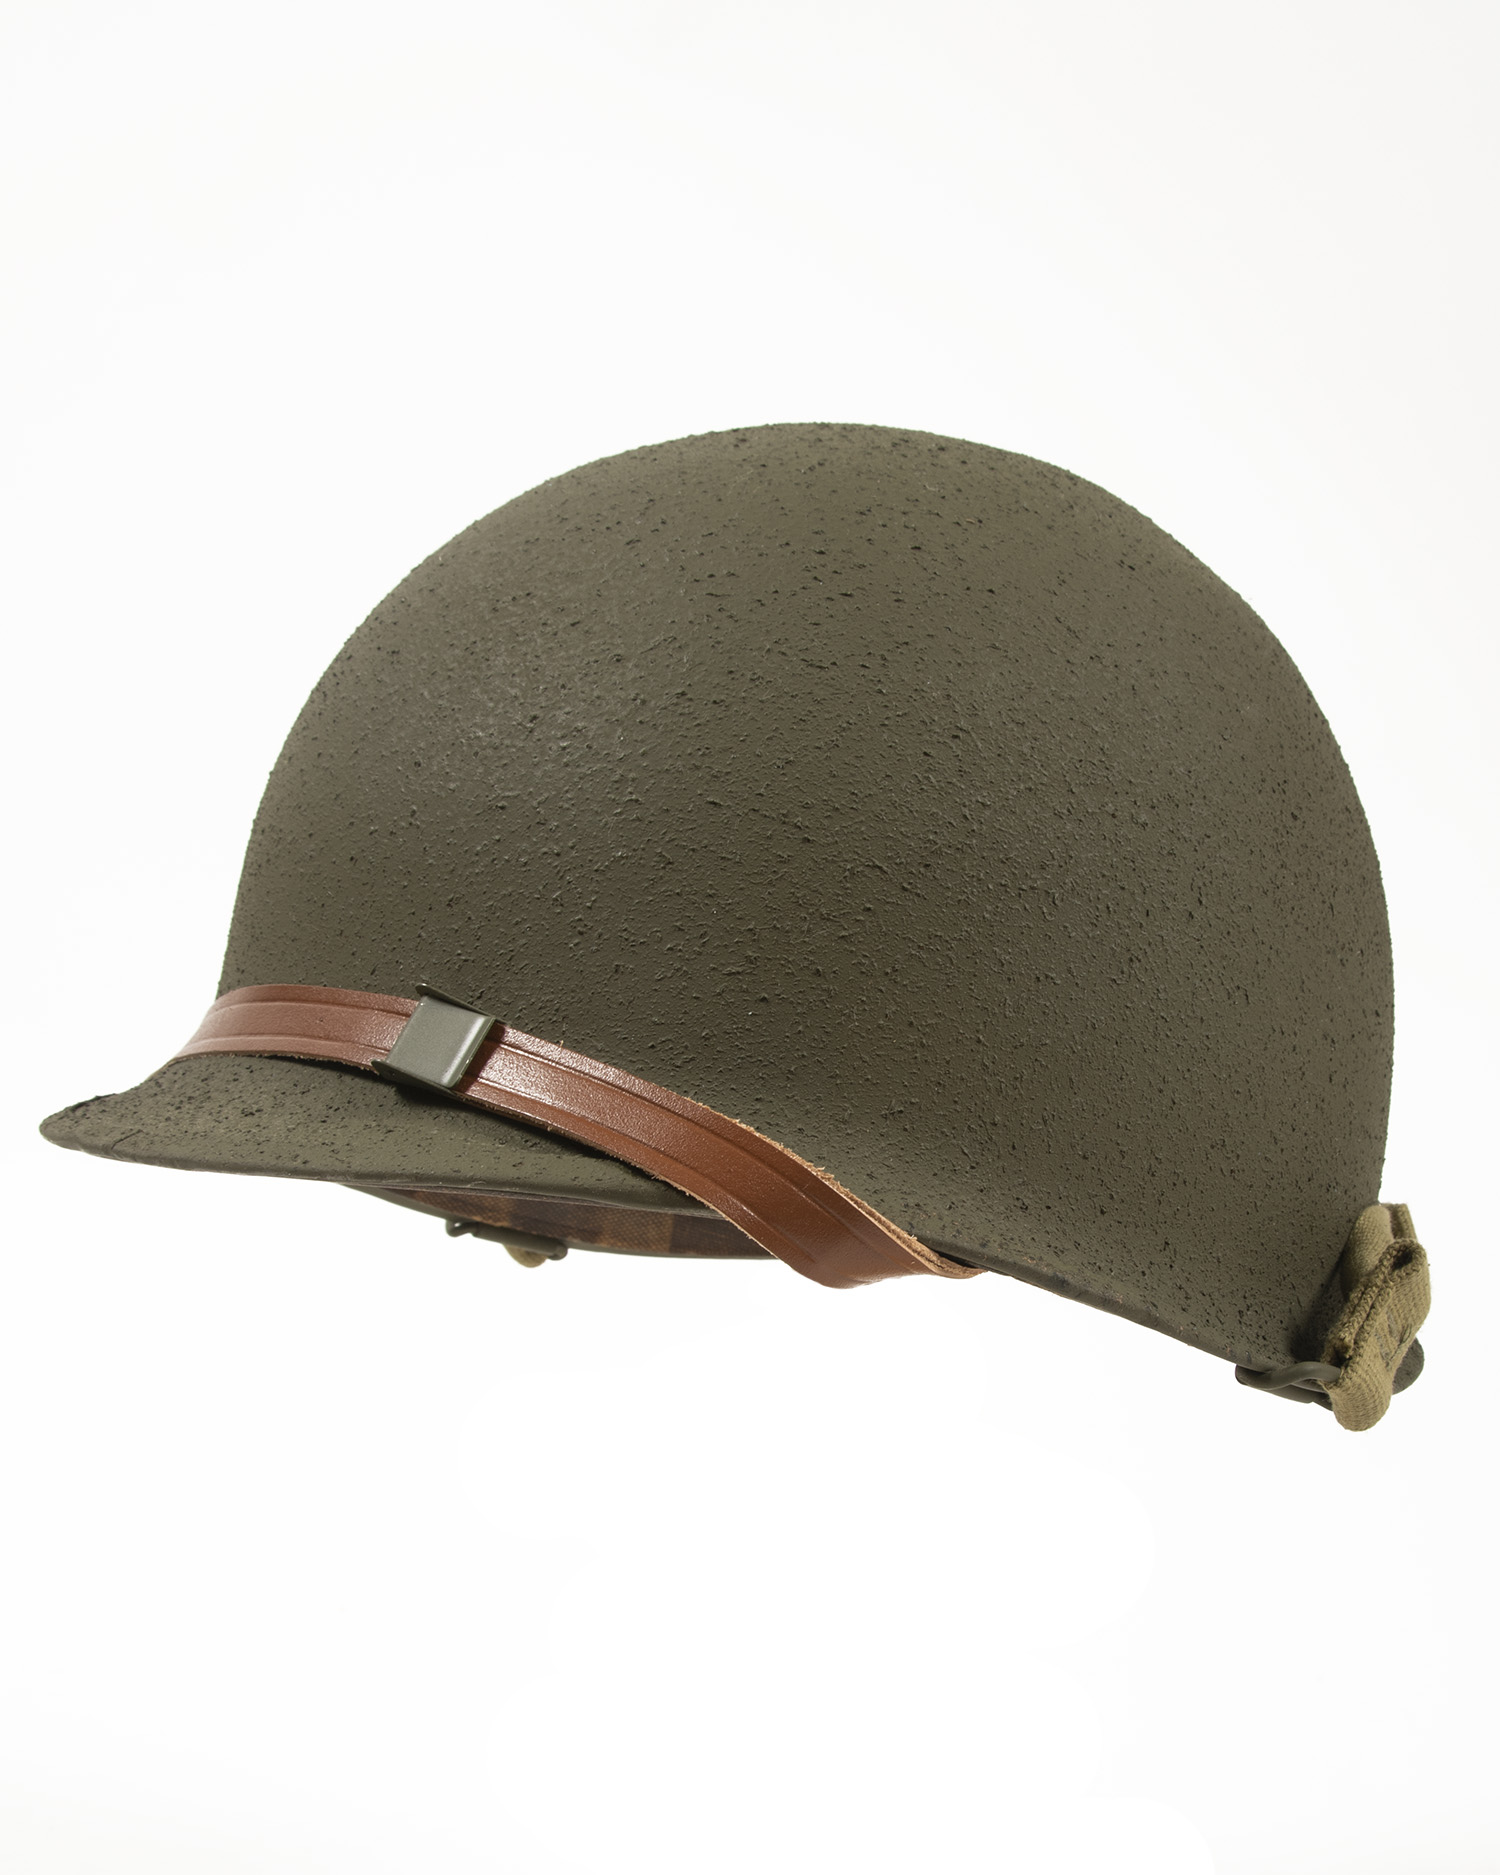 US WWII M1 Helmet | ATF